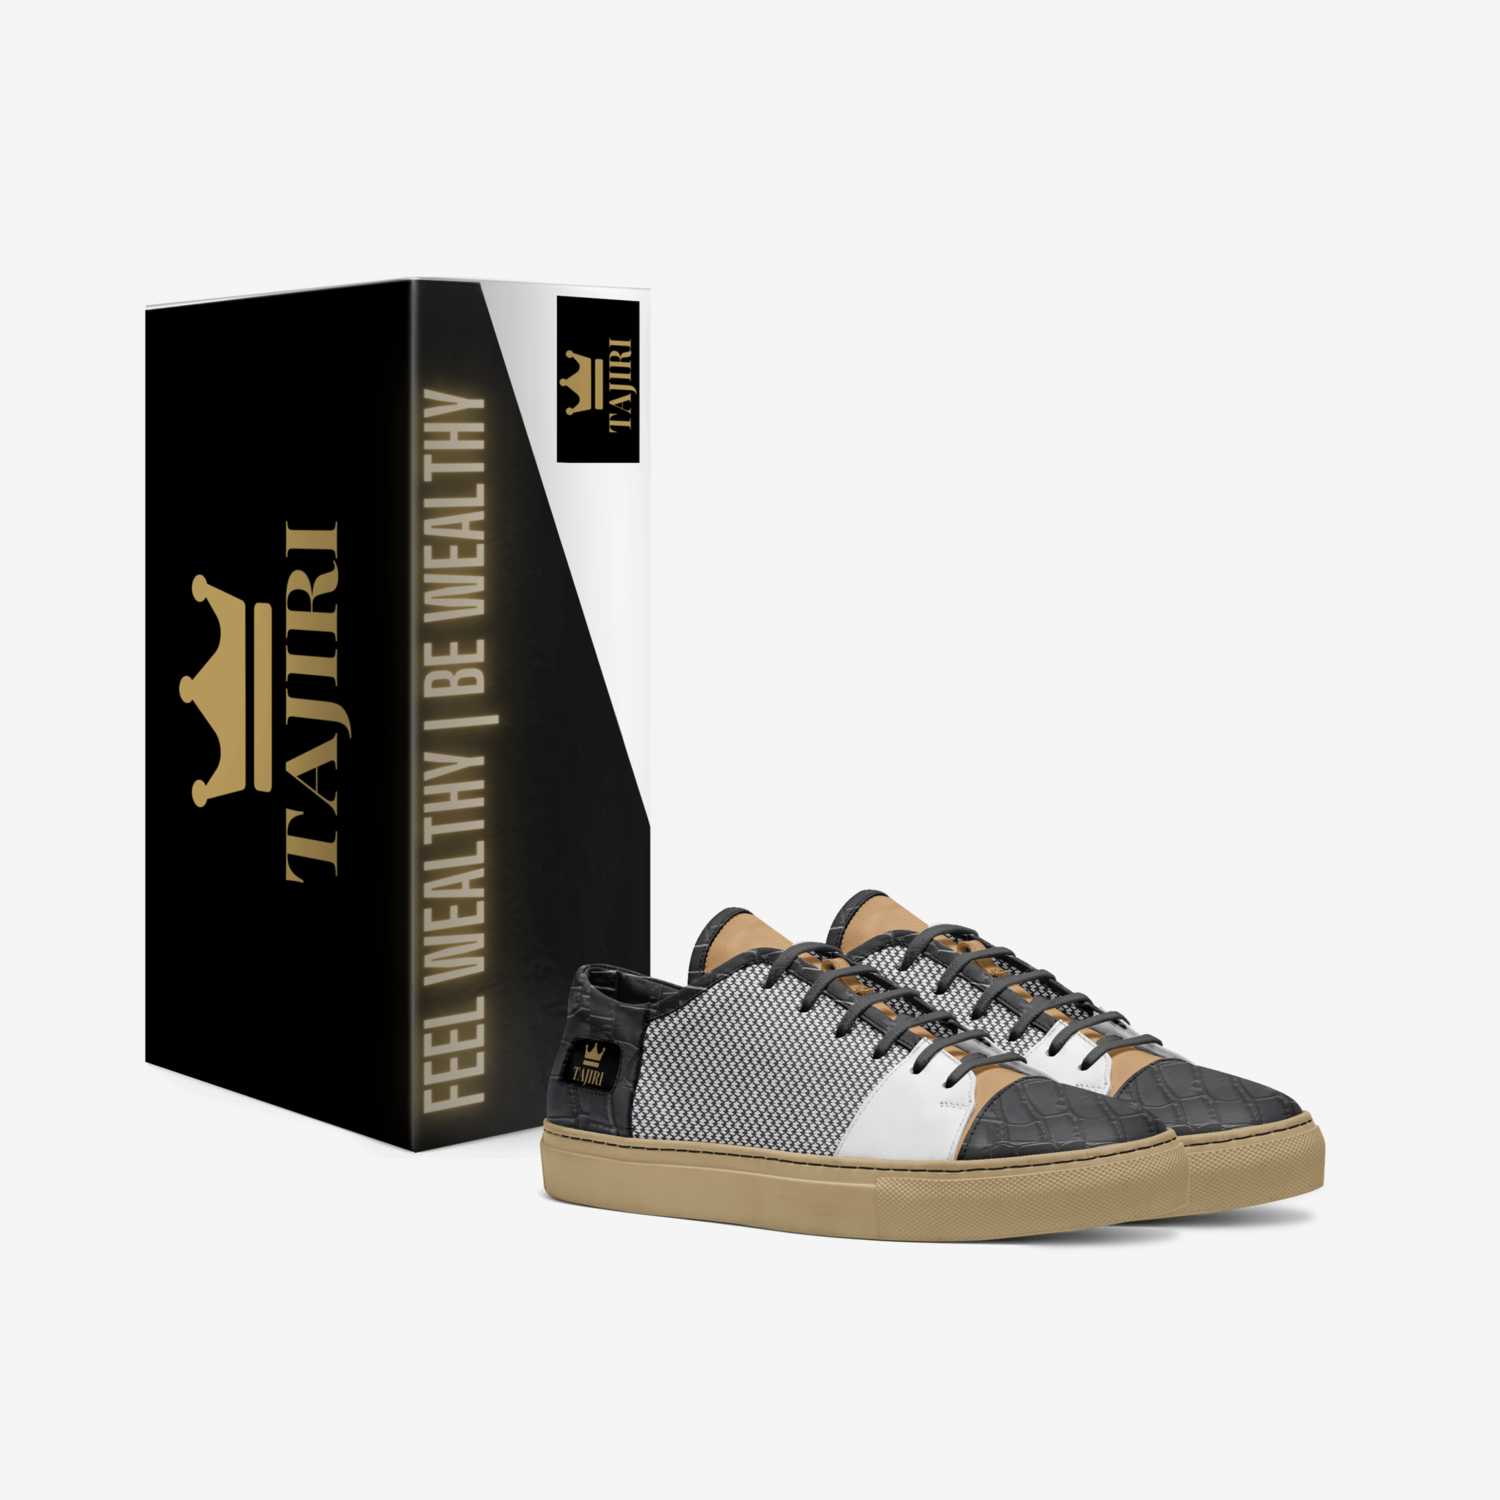 TAJIRI Bando Low custom made in Italy shoes by Carissa Rodgers | Box view